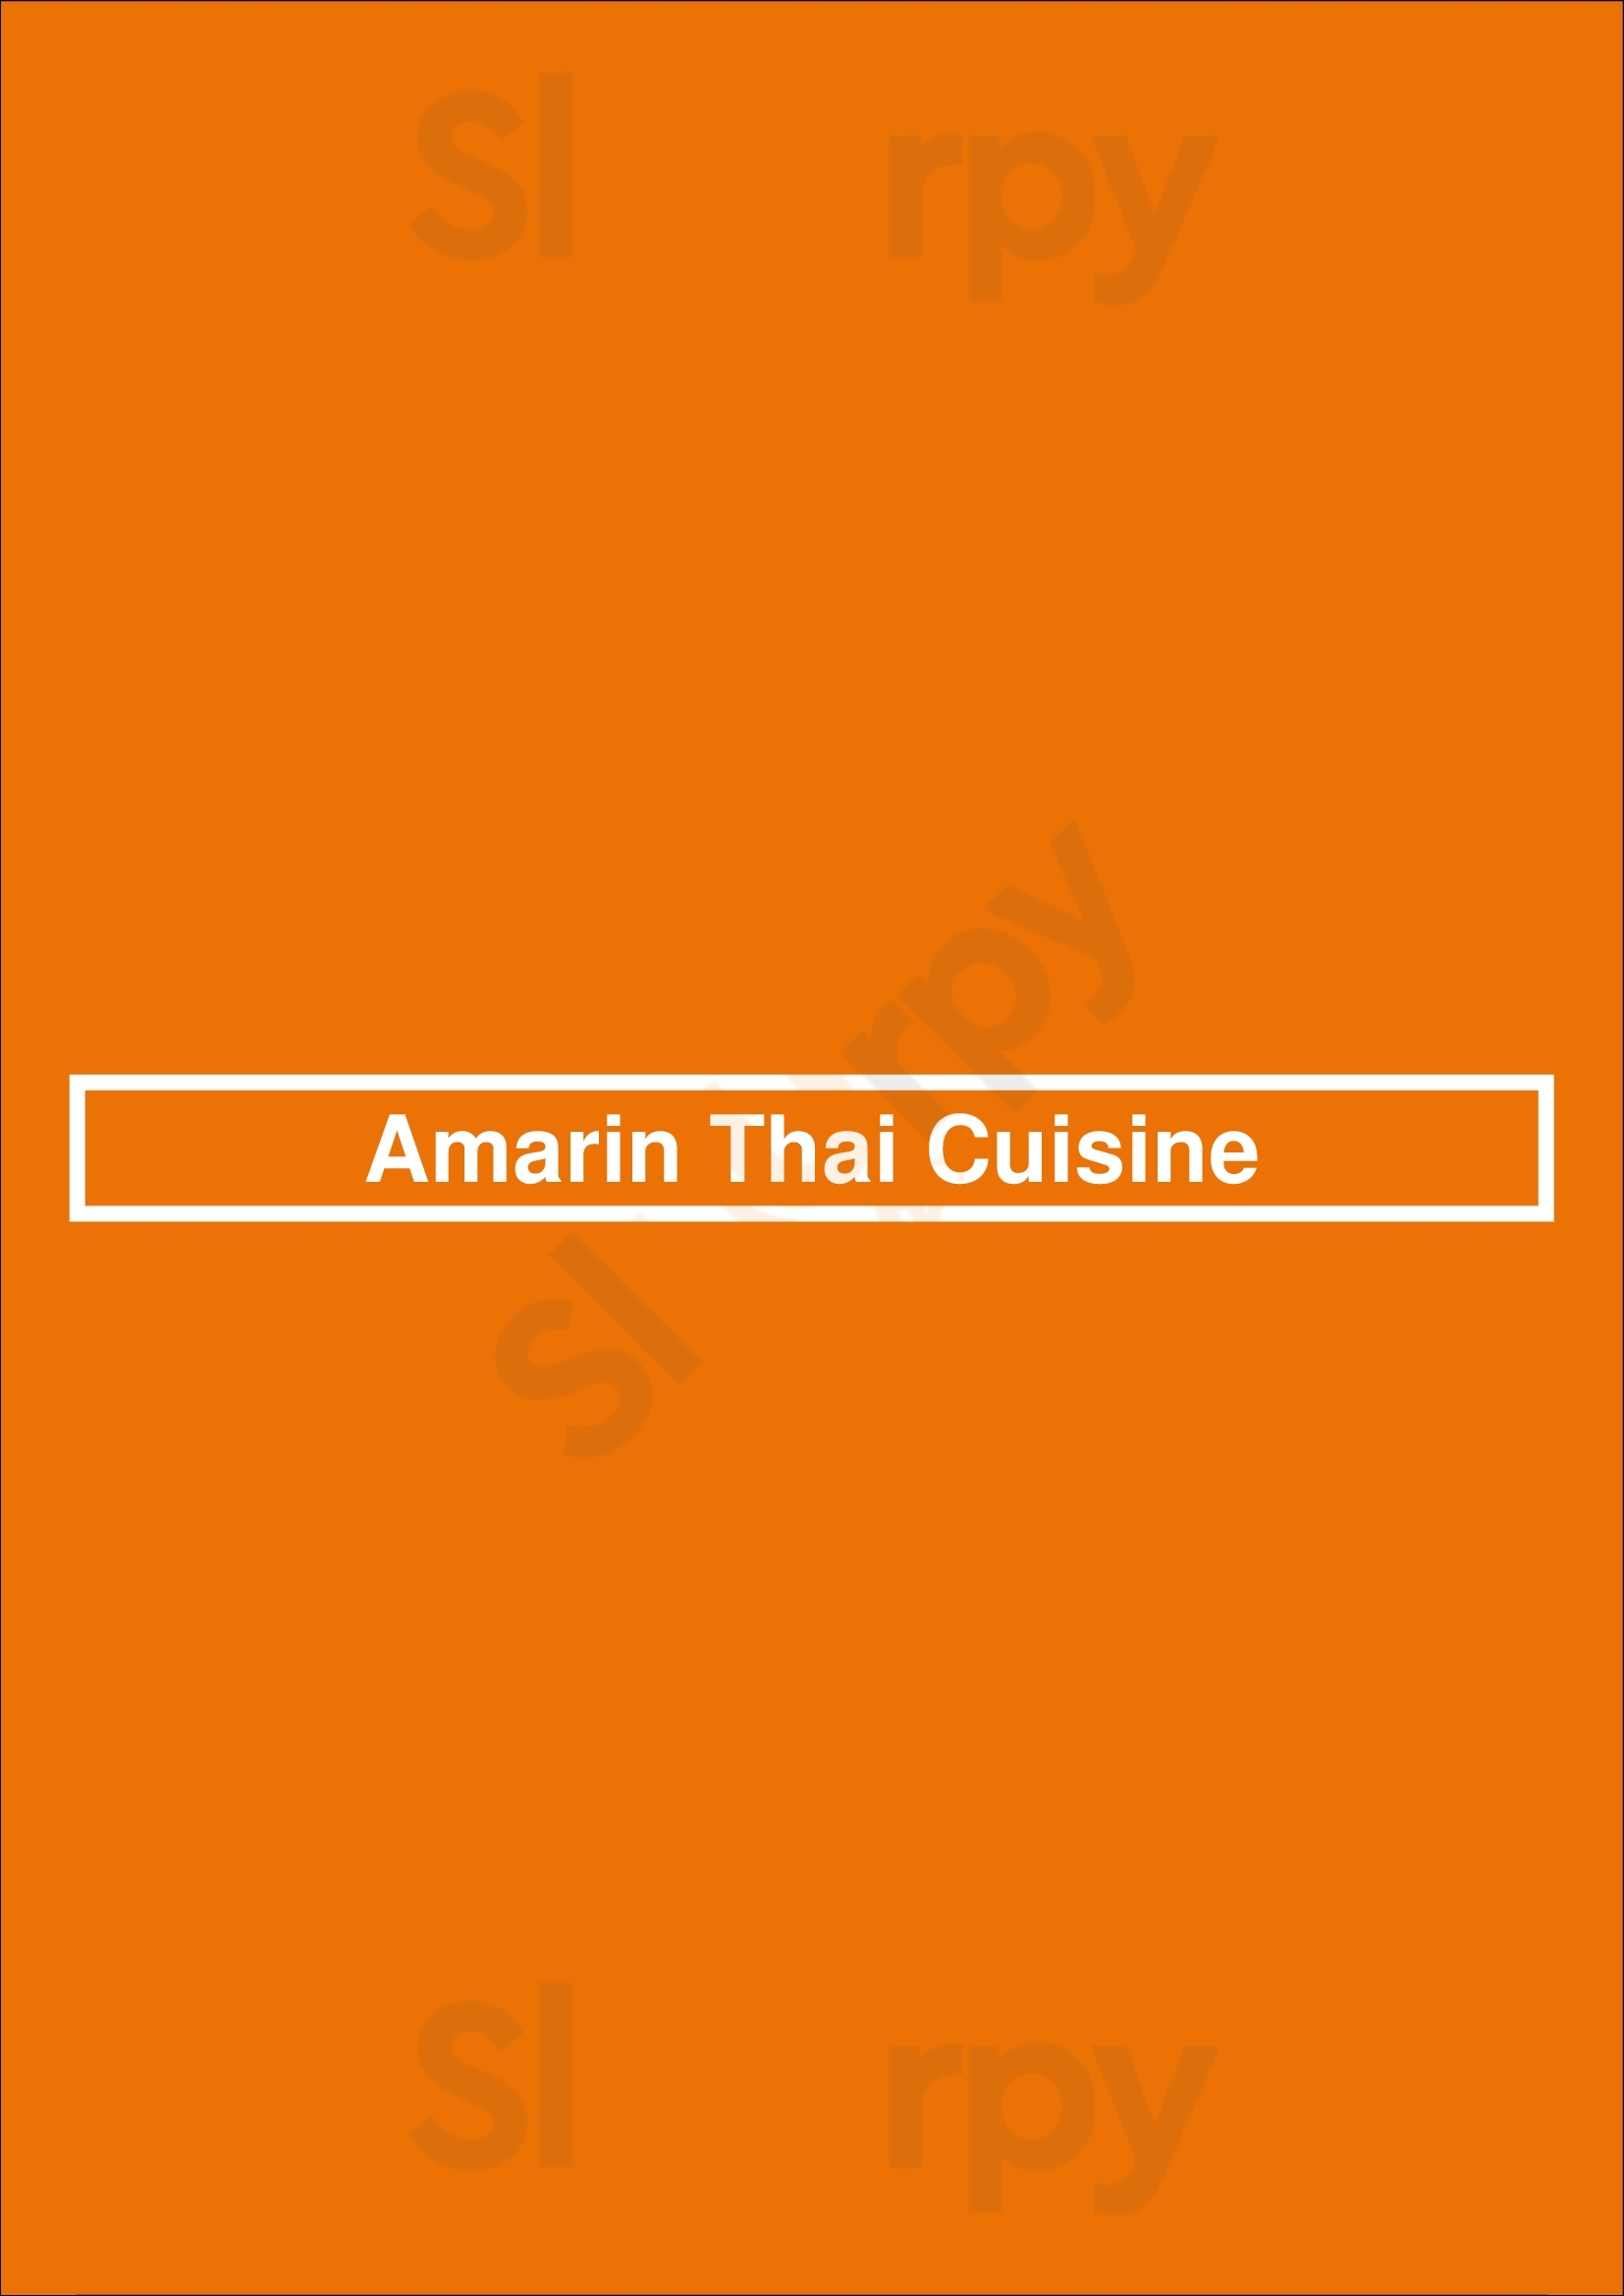 Amarin Thai Cuisine San Jose Menu - 1